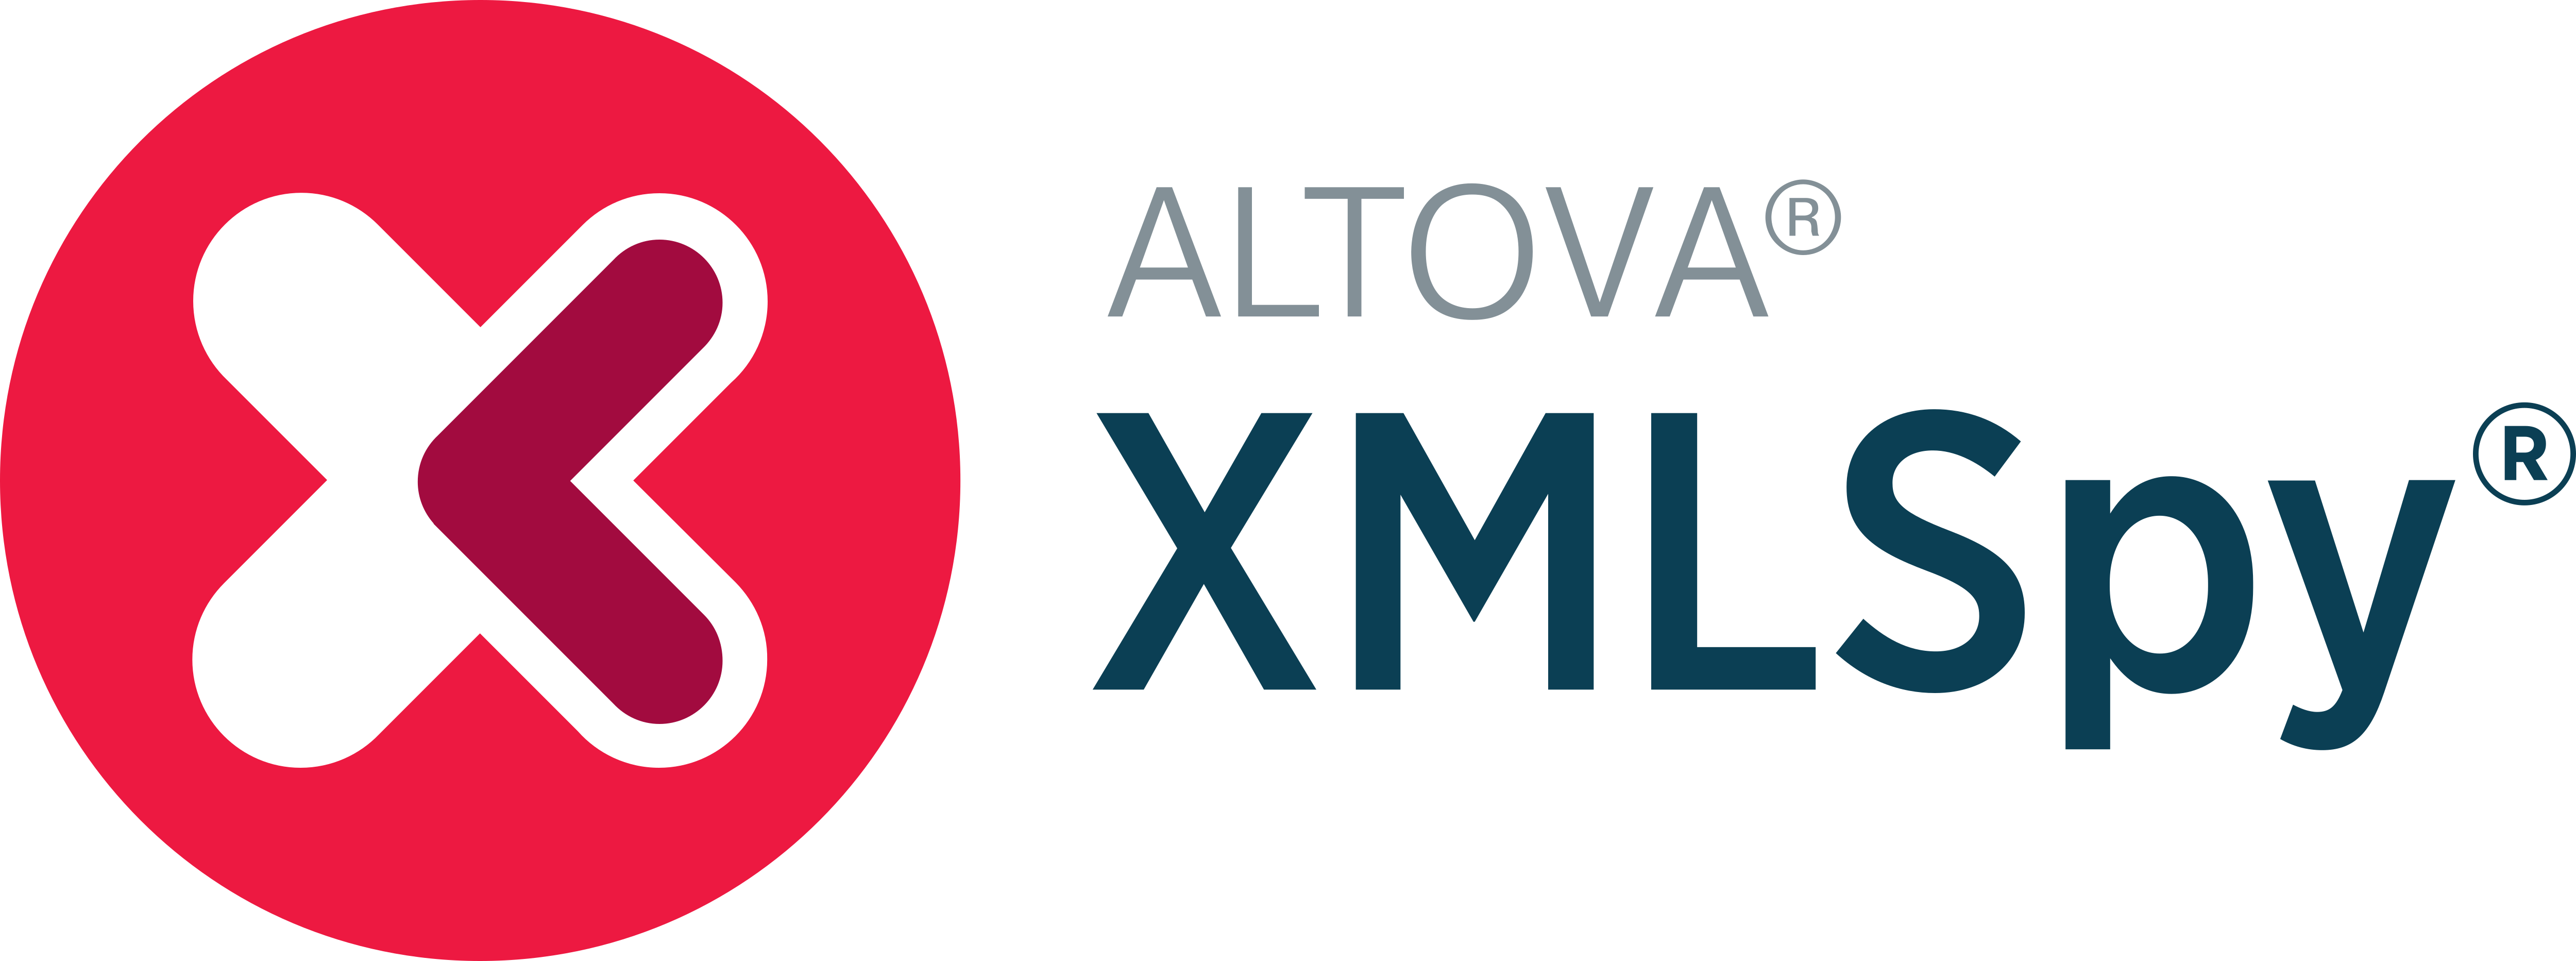 altova-xmlspy-logos-download